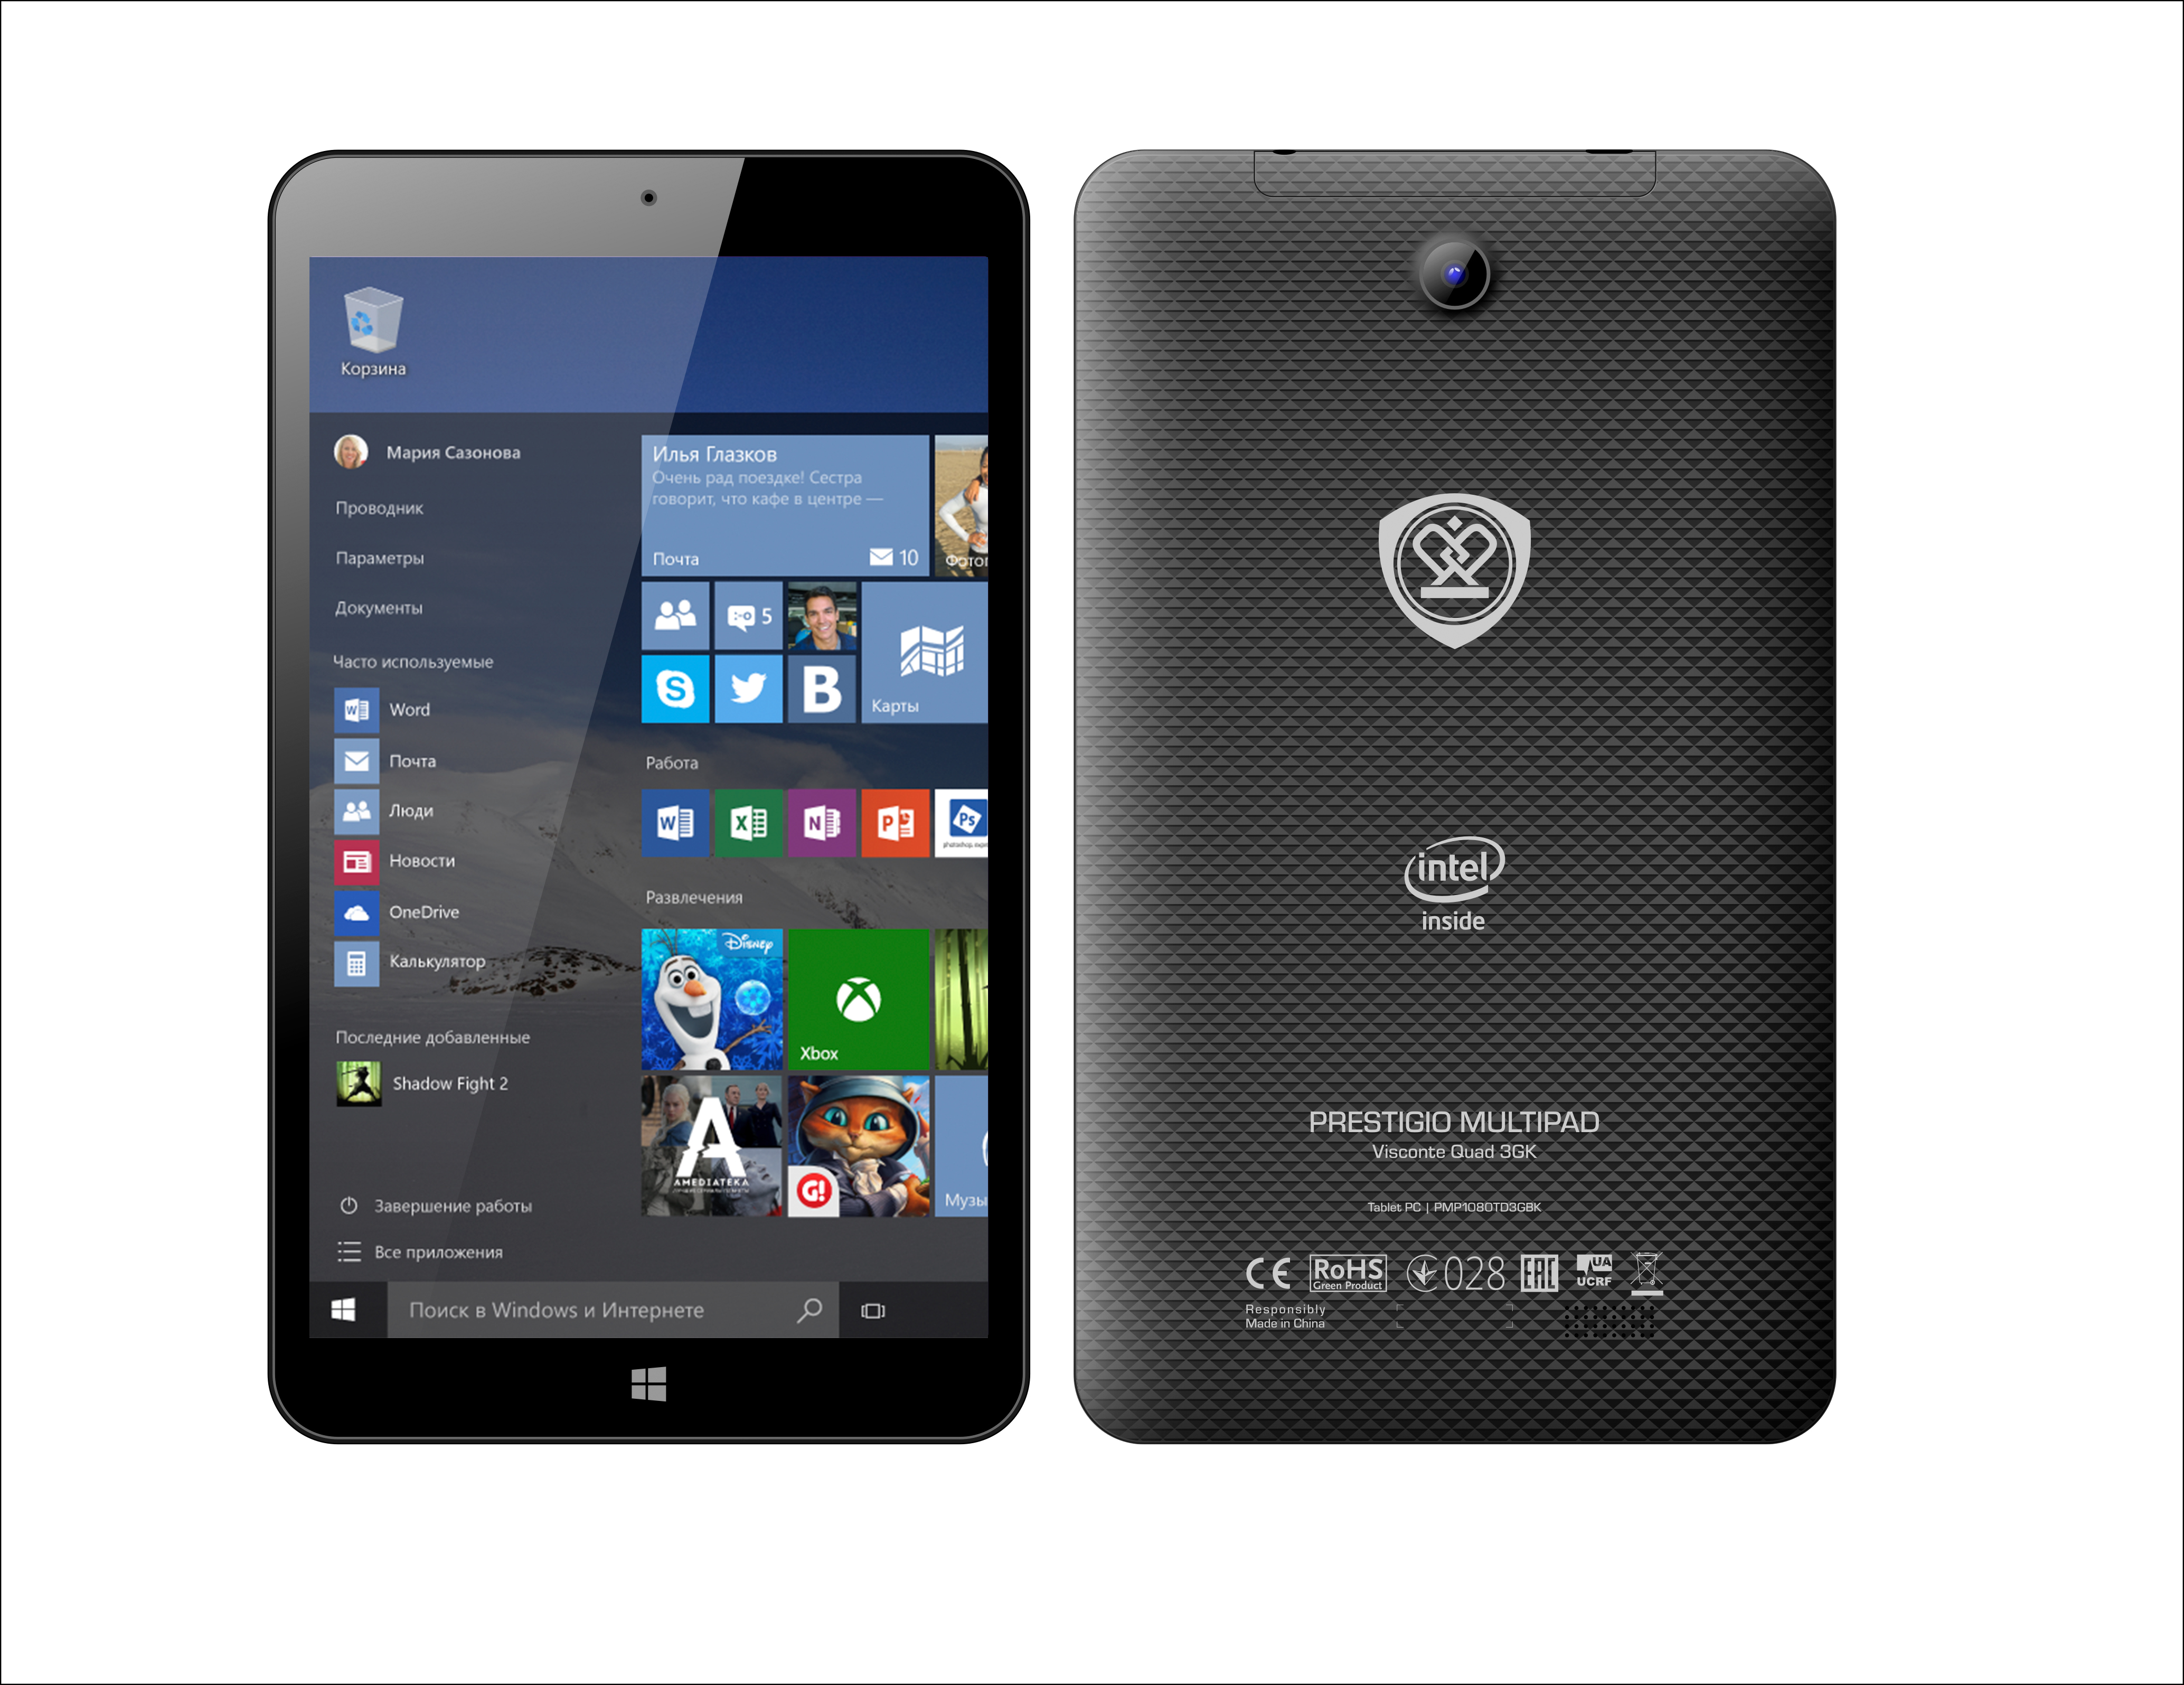 Планшет Prestigio Multipad Visconte Quad 3GK на базе Windows 10 доступен за  6990 рублей